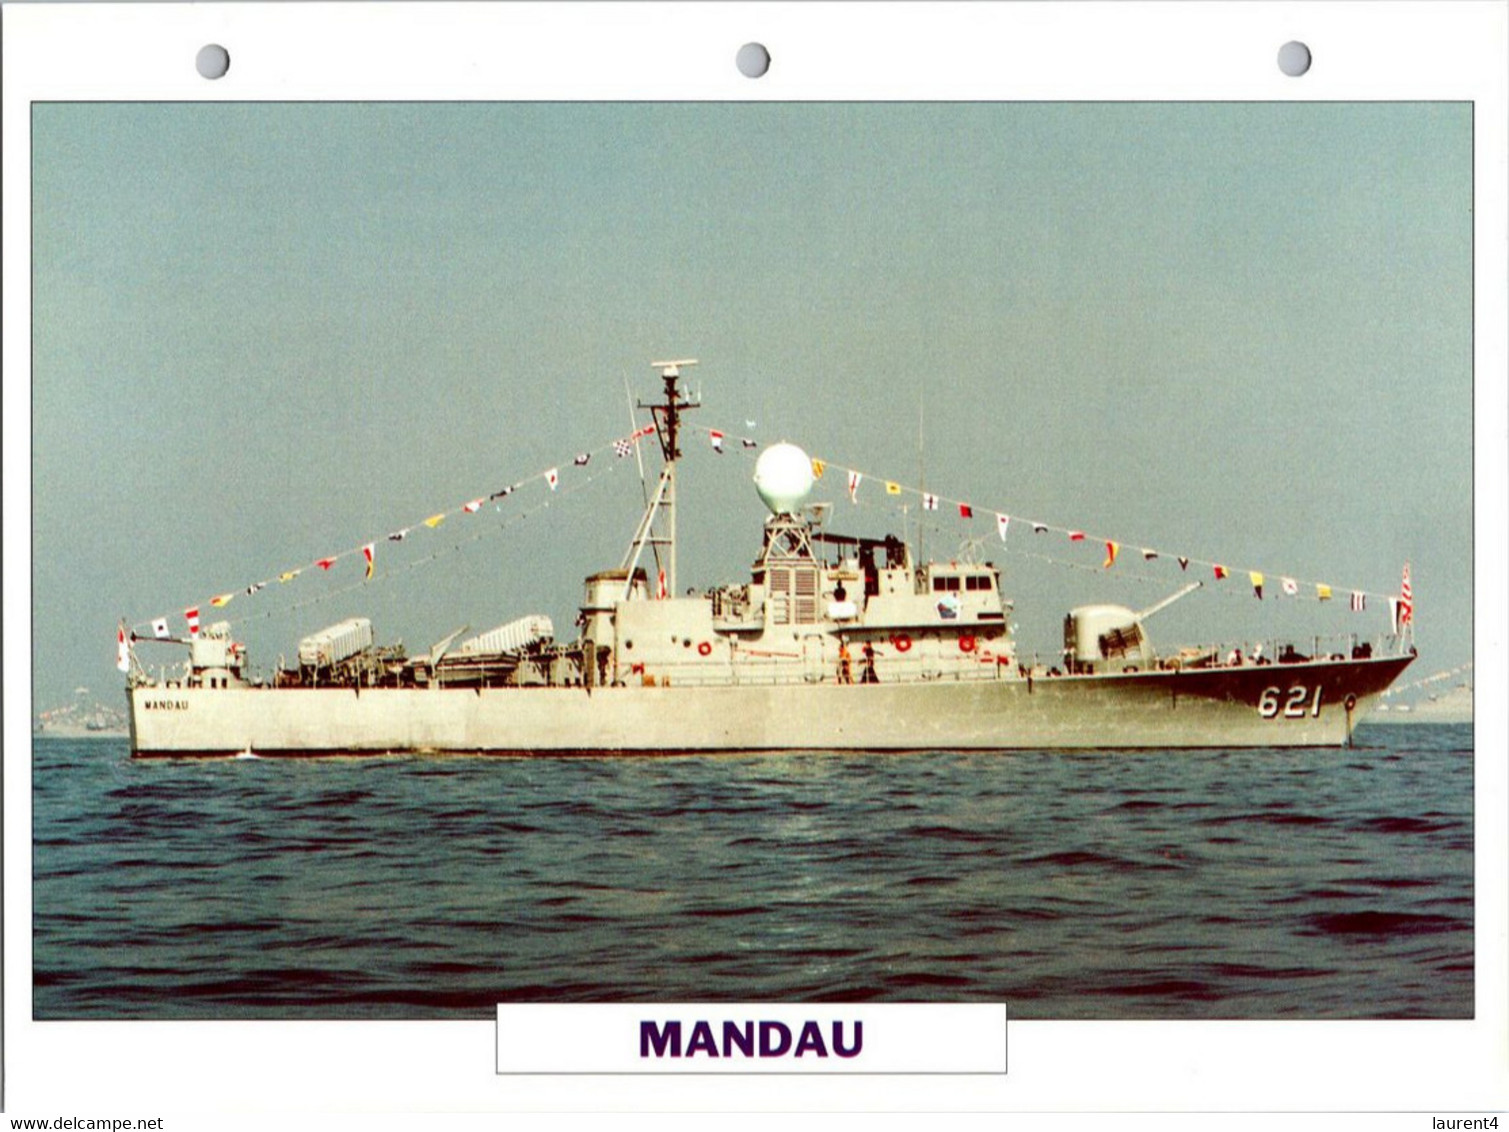 (25 X 19 Cm) (10-9-2021) - U - Photo And Info Sheet On Warship - Poland Navy - Mandau - Bateaux